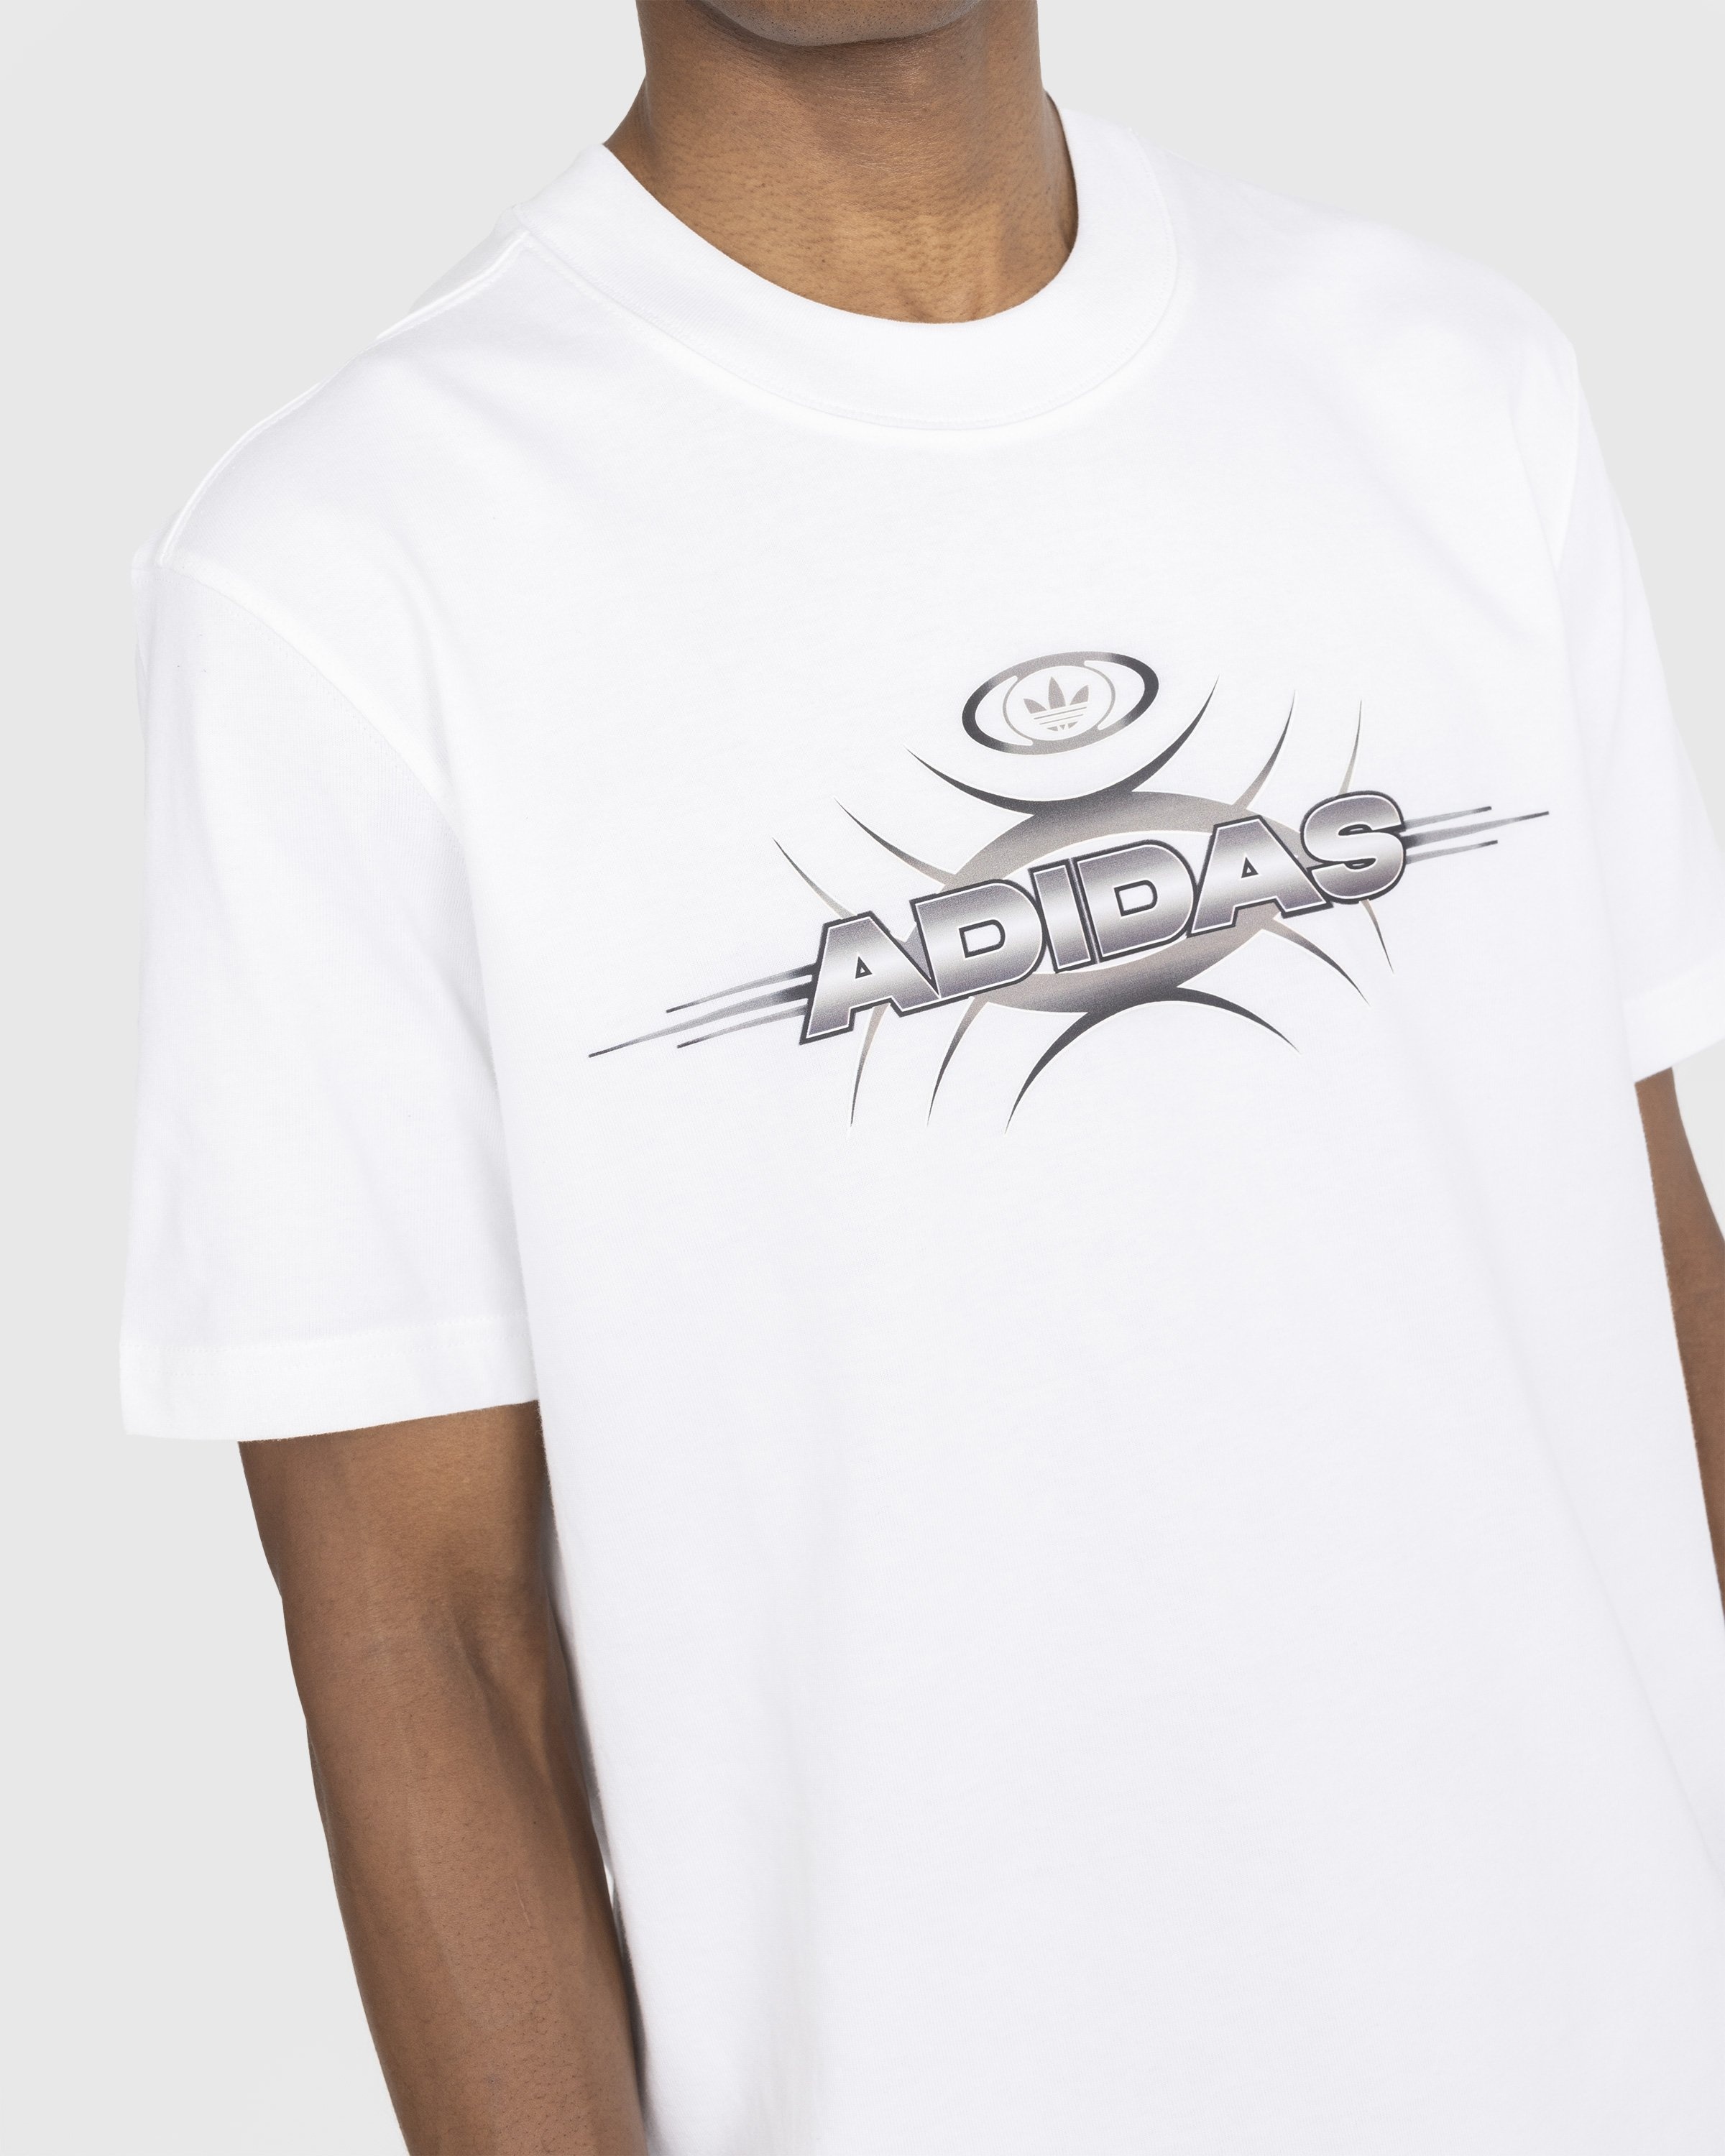 Adidas – Graphic Logo T-Shirt White | Highsnobiety Shop